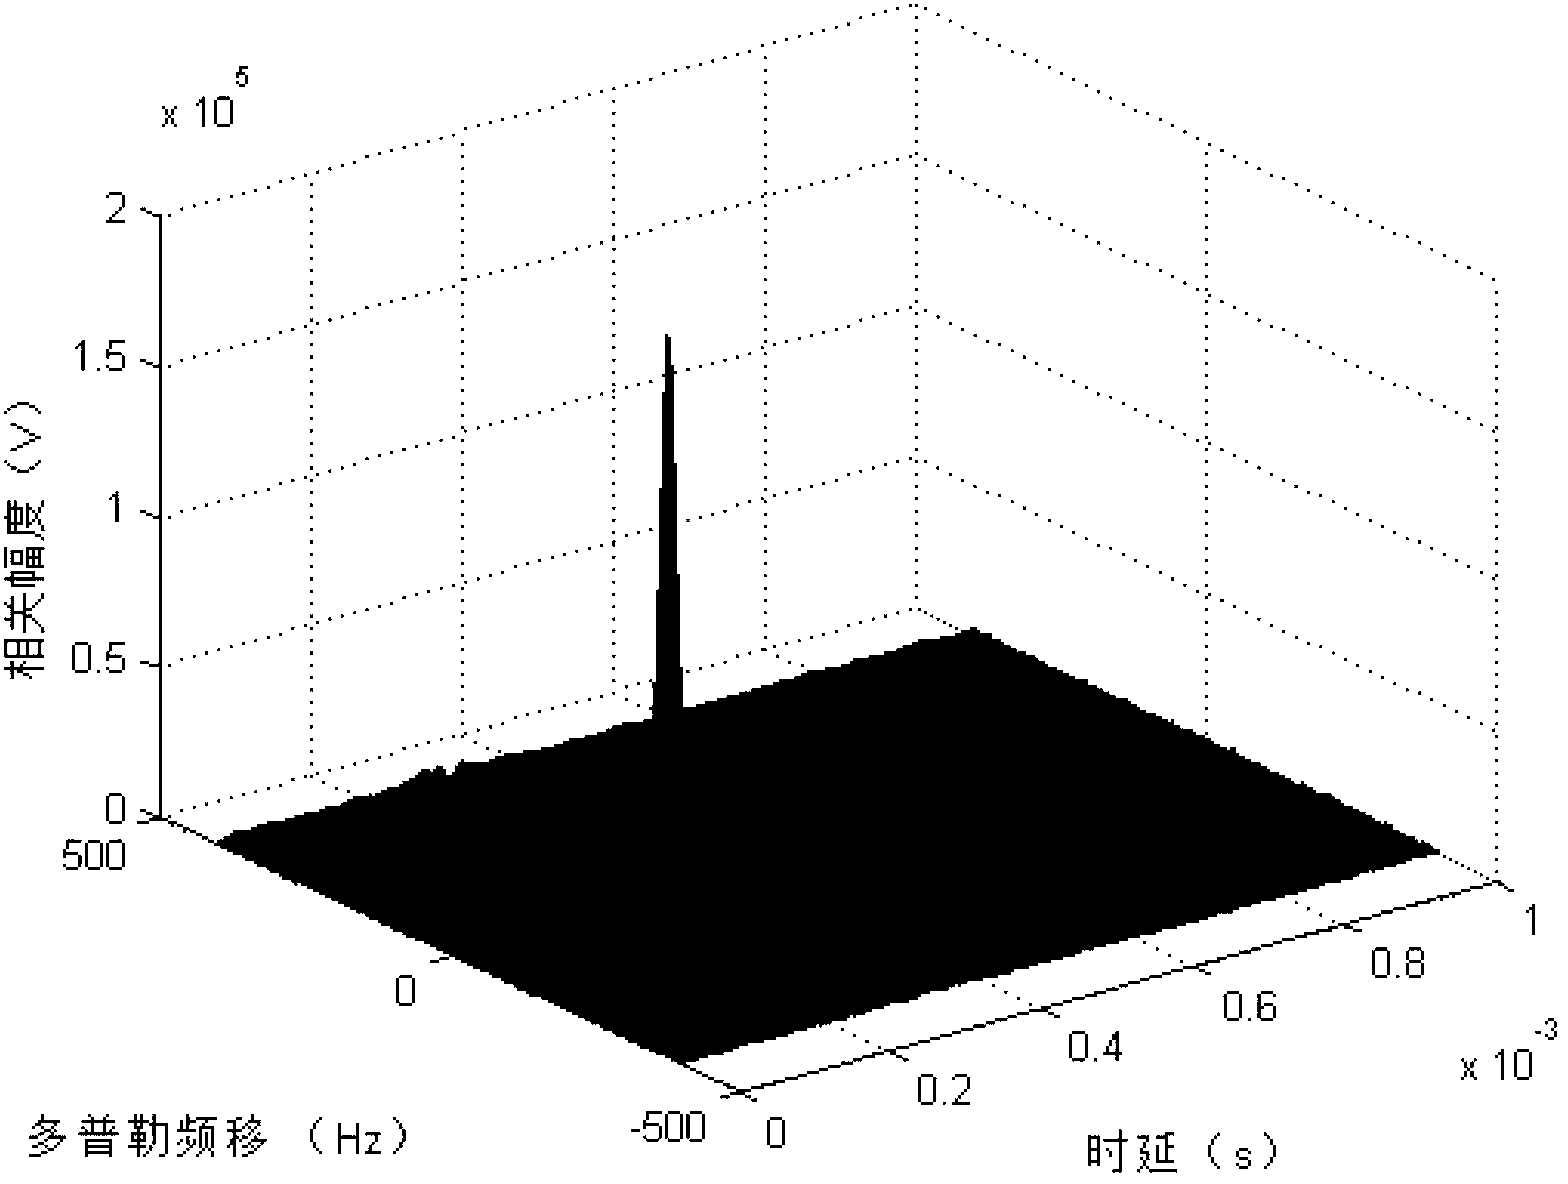 Method for estimating weak signal separation on basis of positioning for external radiation sources